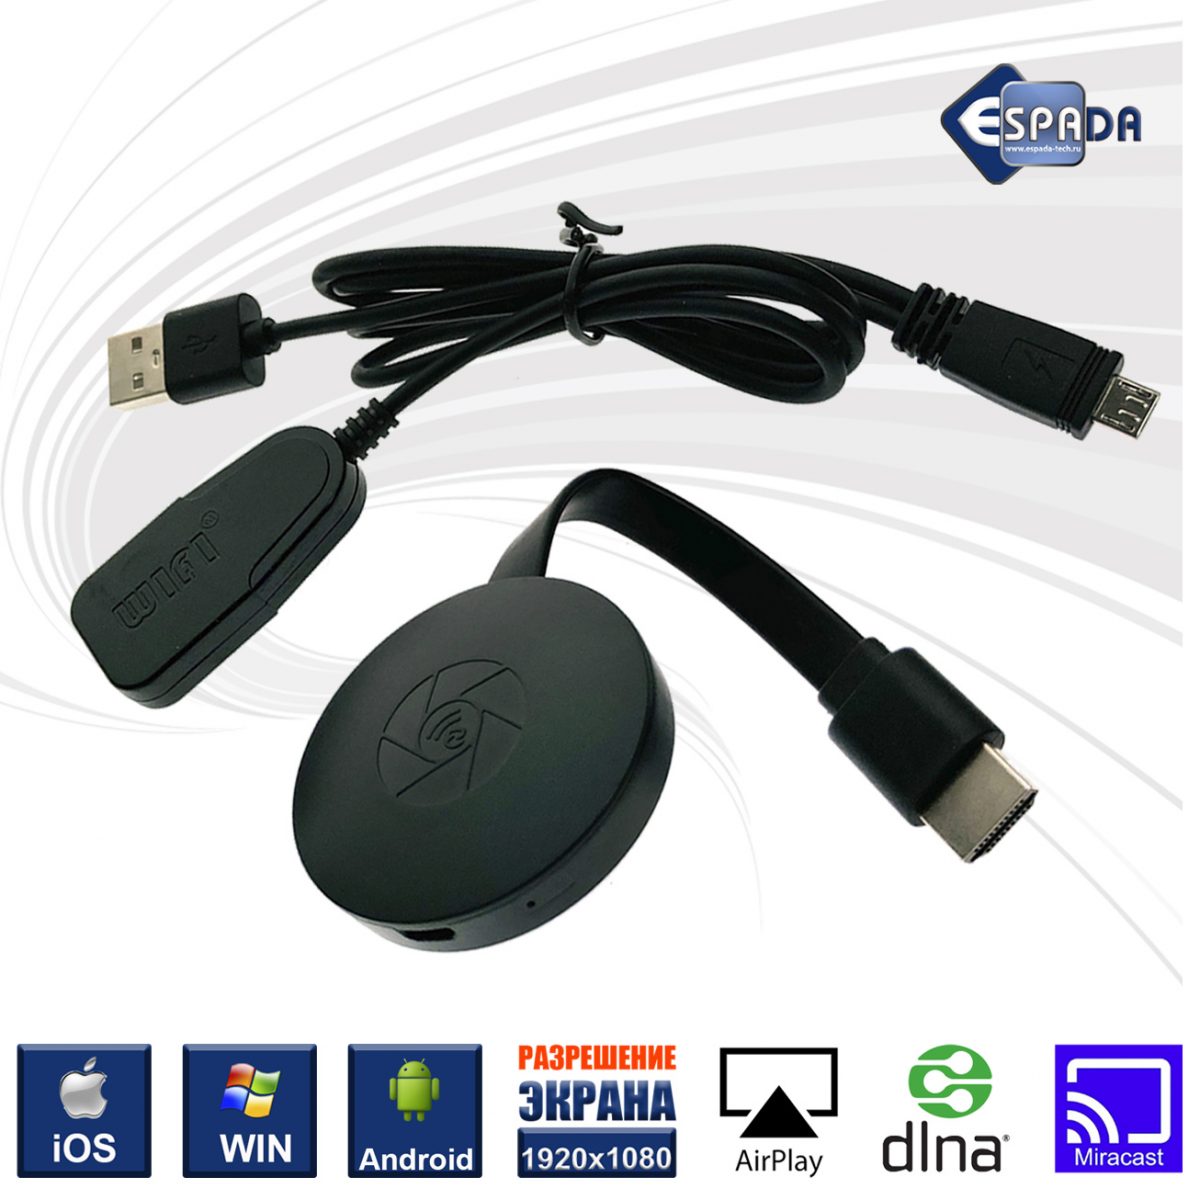 Адаптер WiFi HDMI WV04 Espada для телевизора, монитора чипсет AM8268 / поддержка Android, iOS /